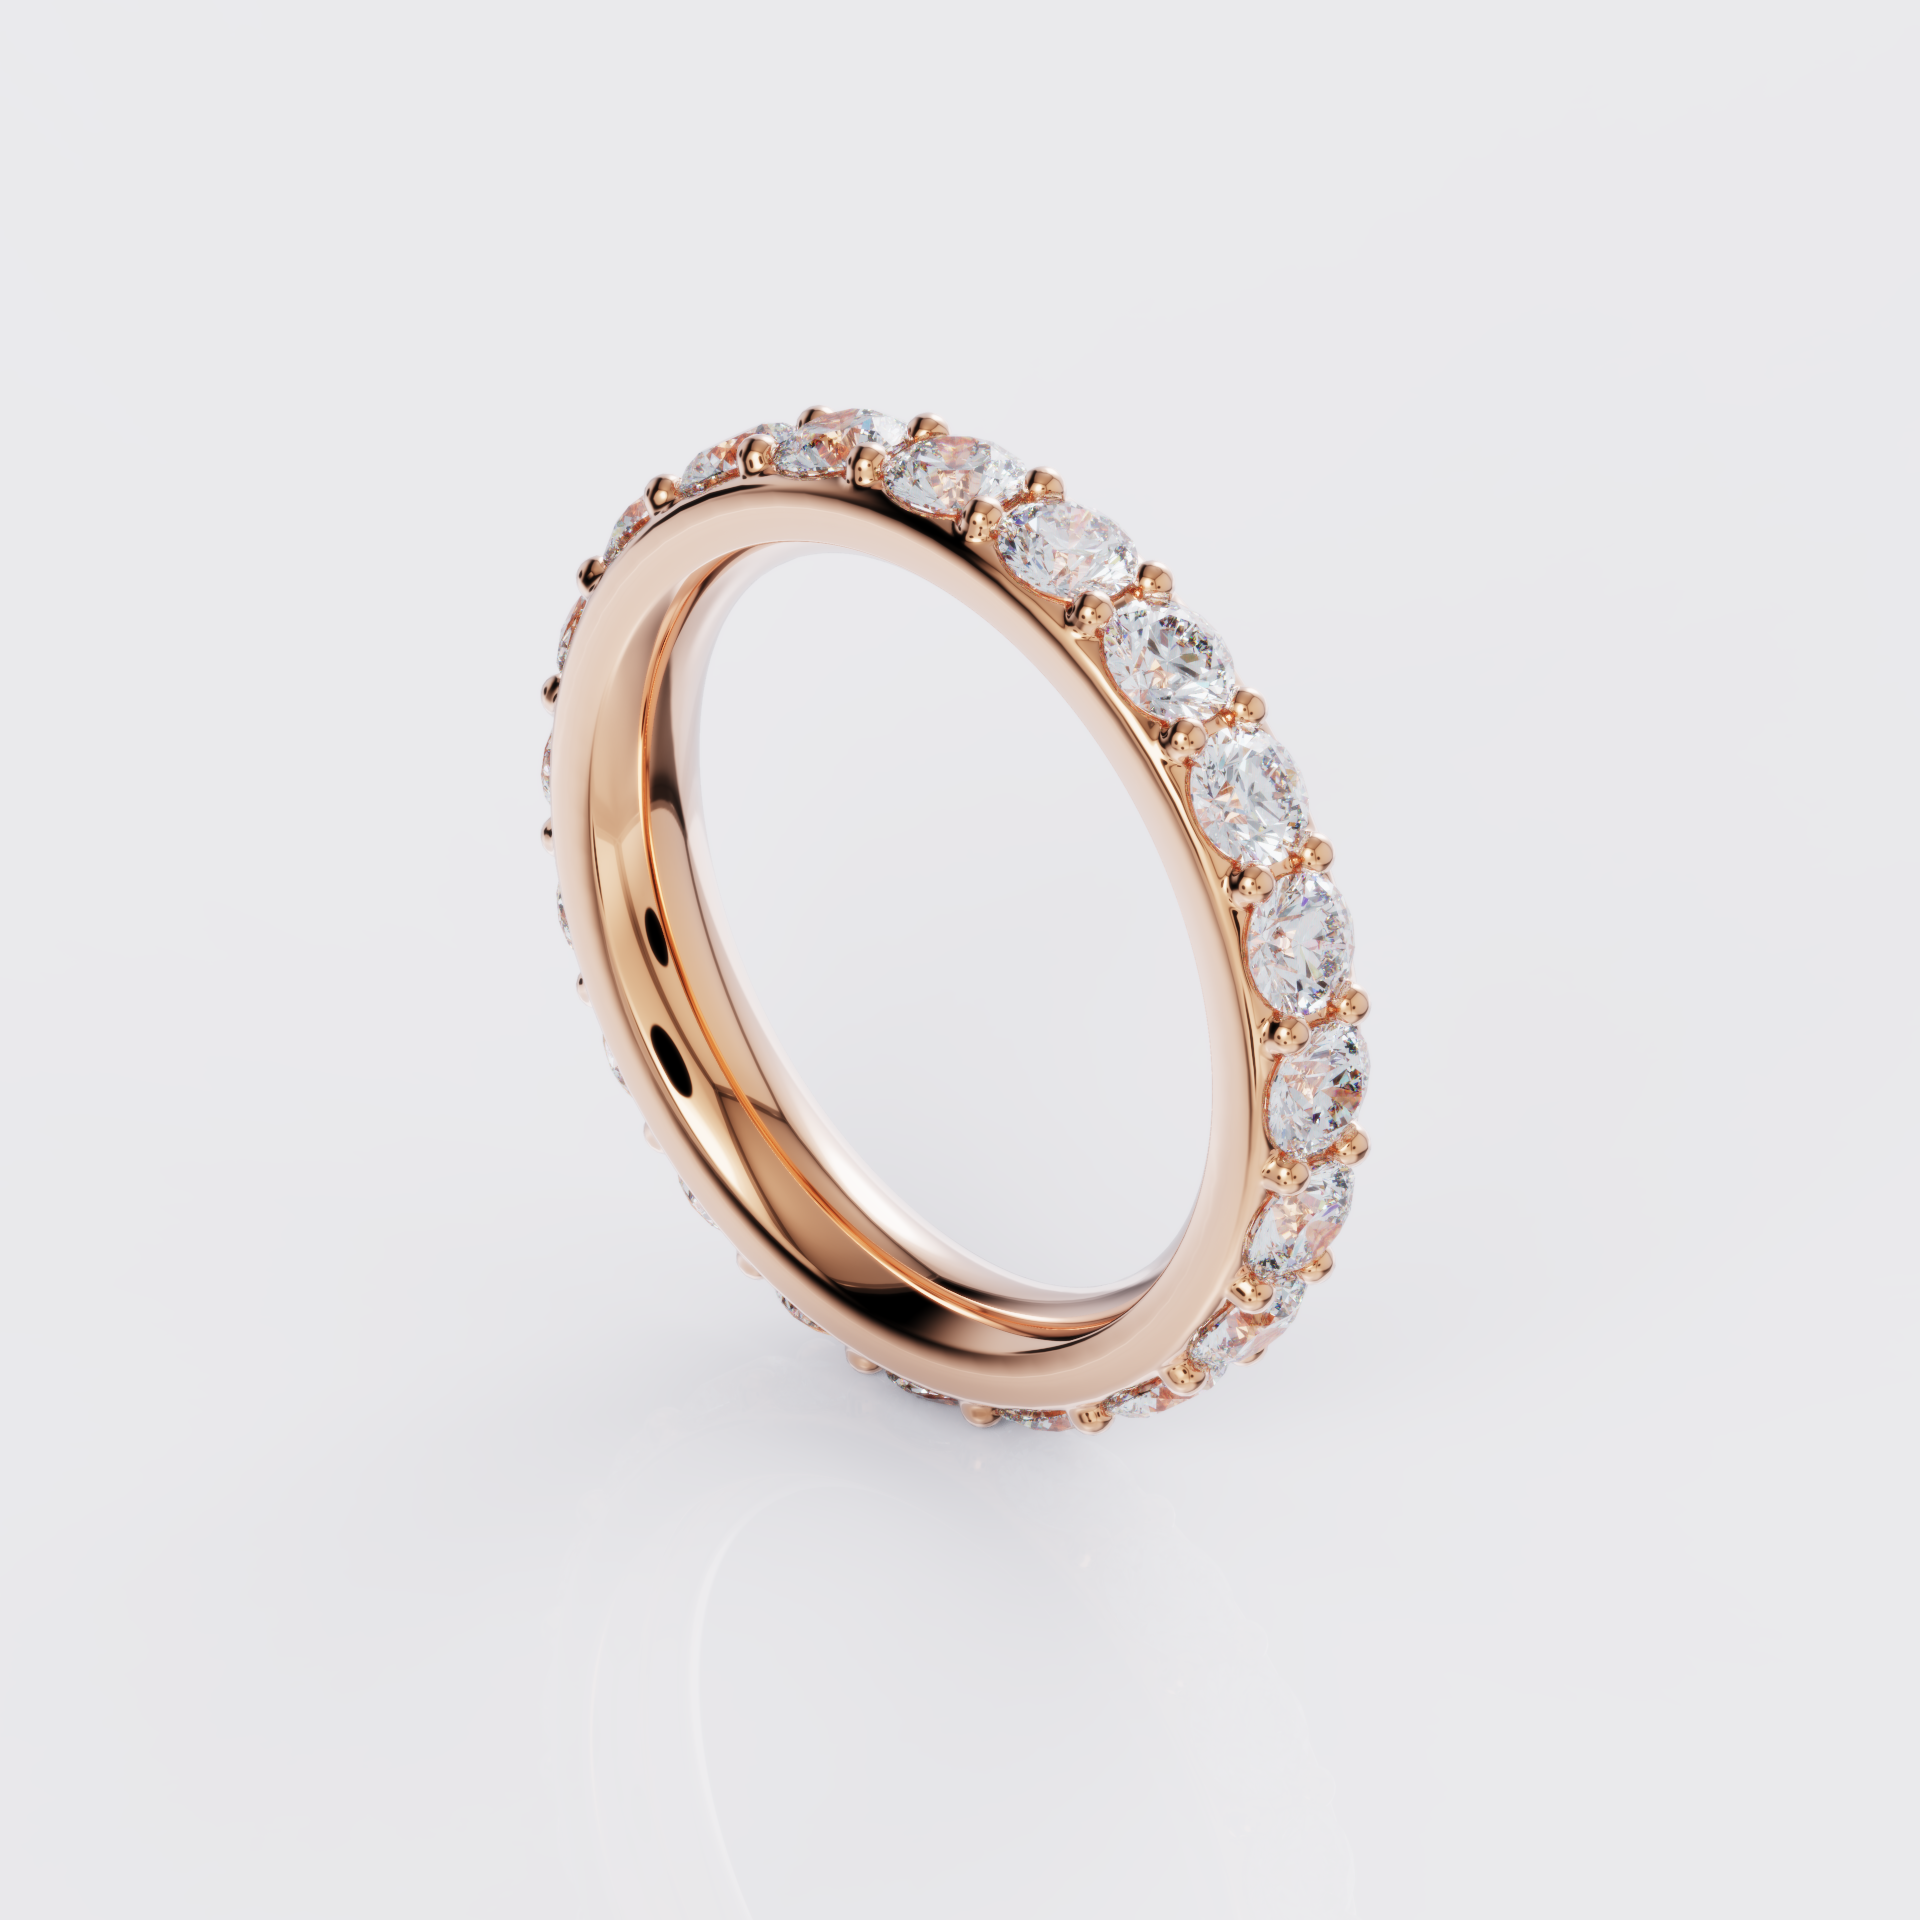 Handmade & Bespoke Wedding Rings | Dot the Jewellers